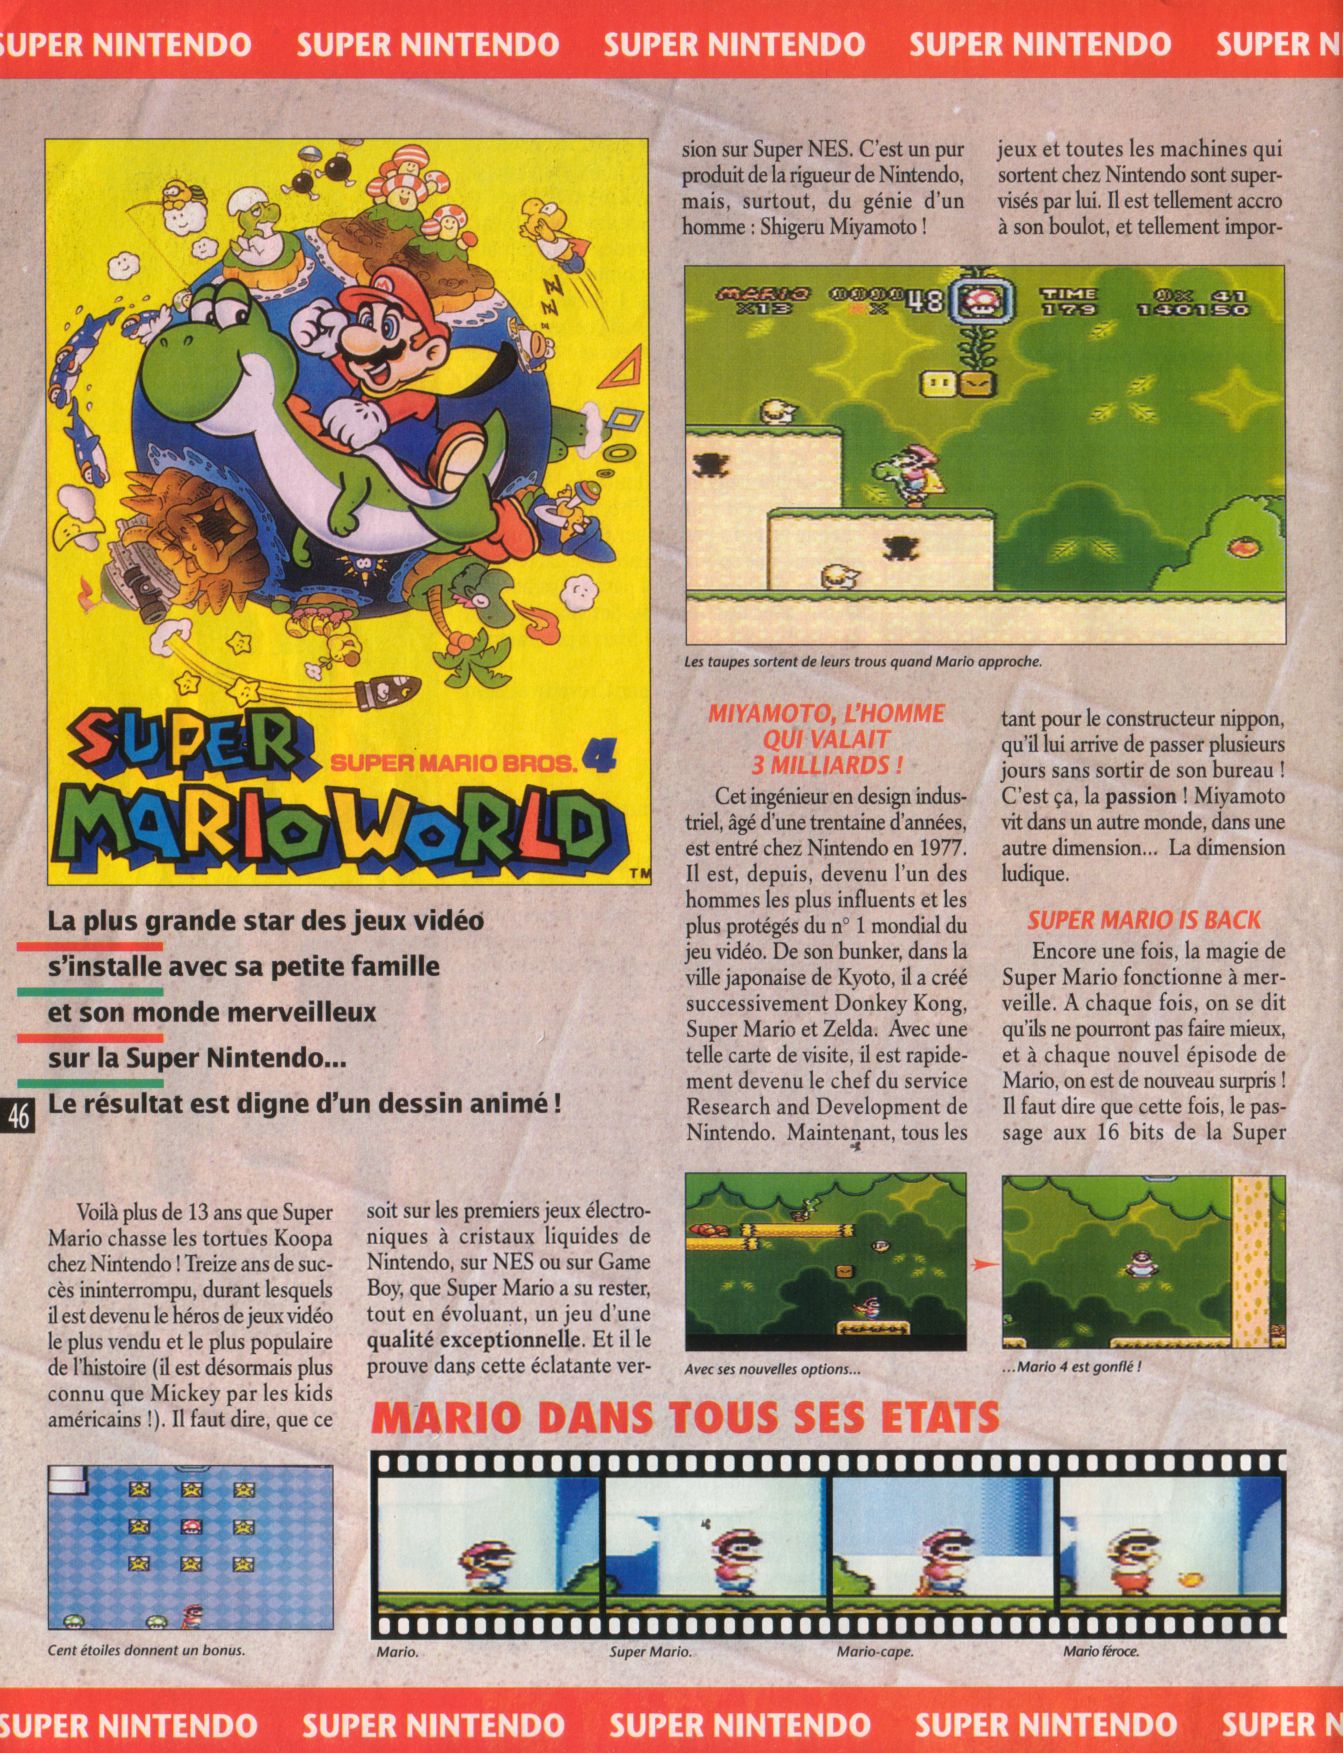 [TEST] Super Mario World (Super Famicom) Player%20One%20019%20-%20Page%20046%20%281992-04%29